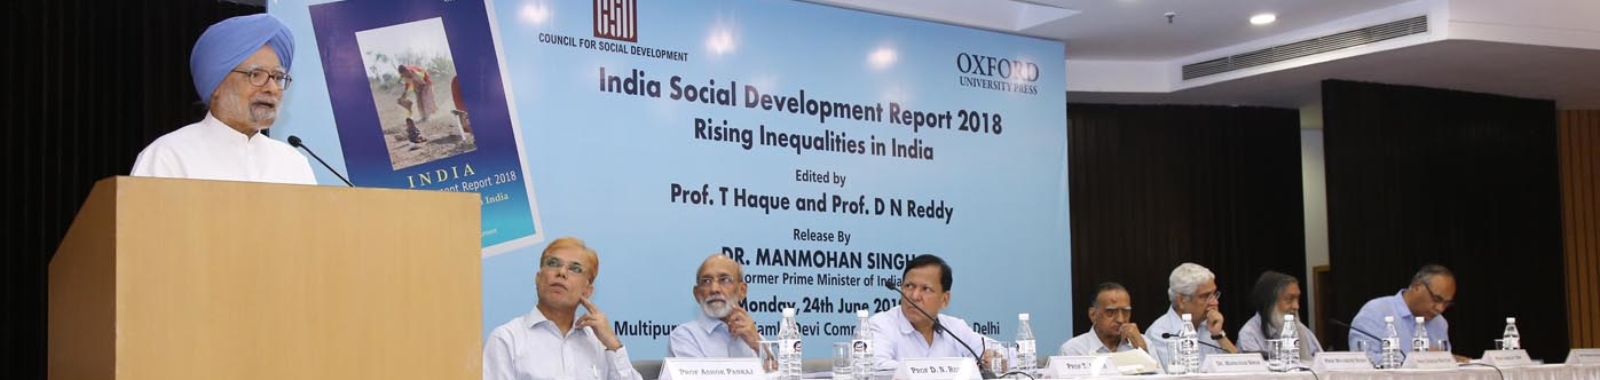 Release of India Social Development Report 2018